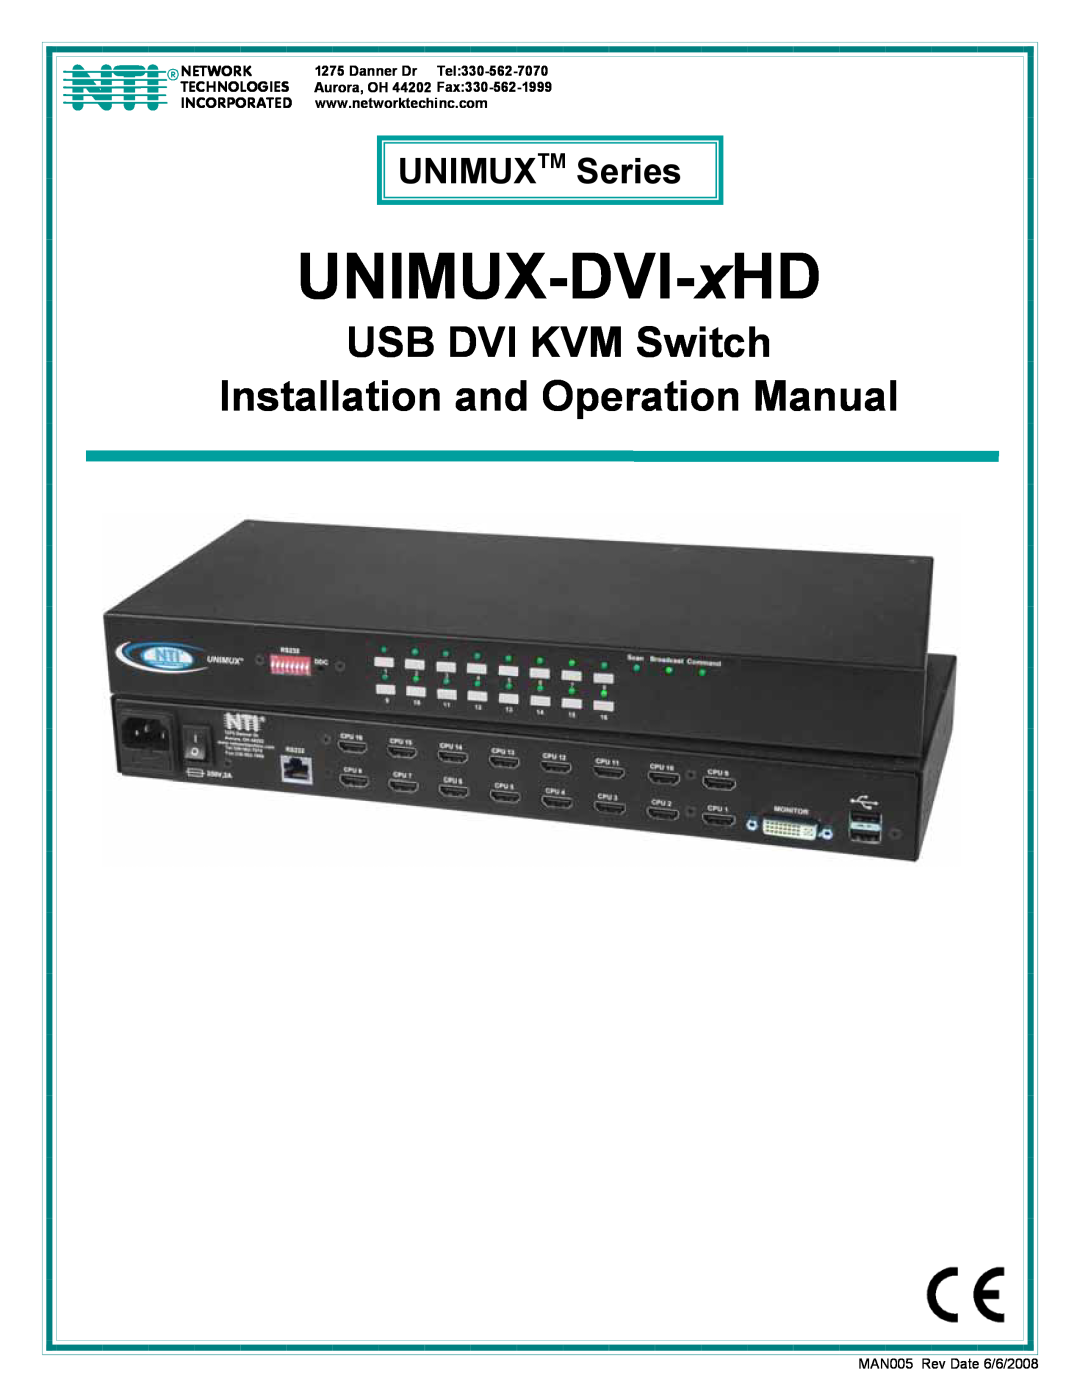 Network Technologies UNIMUX-DVI-xHD operation manual UNIMUXTM Series, USB DVI KVM Switch, Danner Dr Tel330-562-7070 